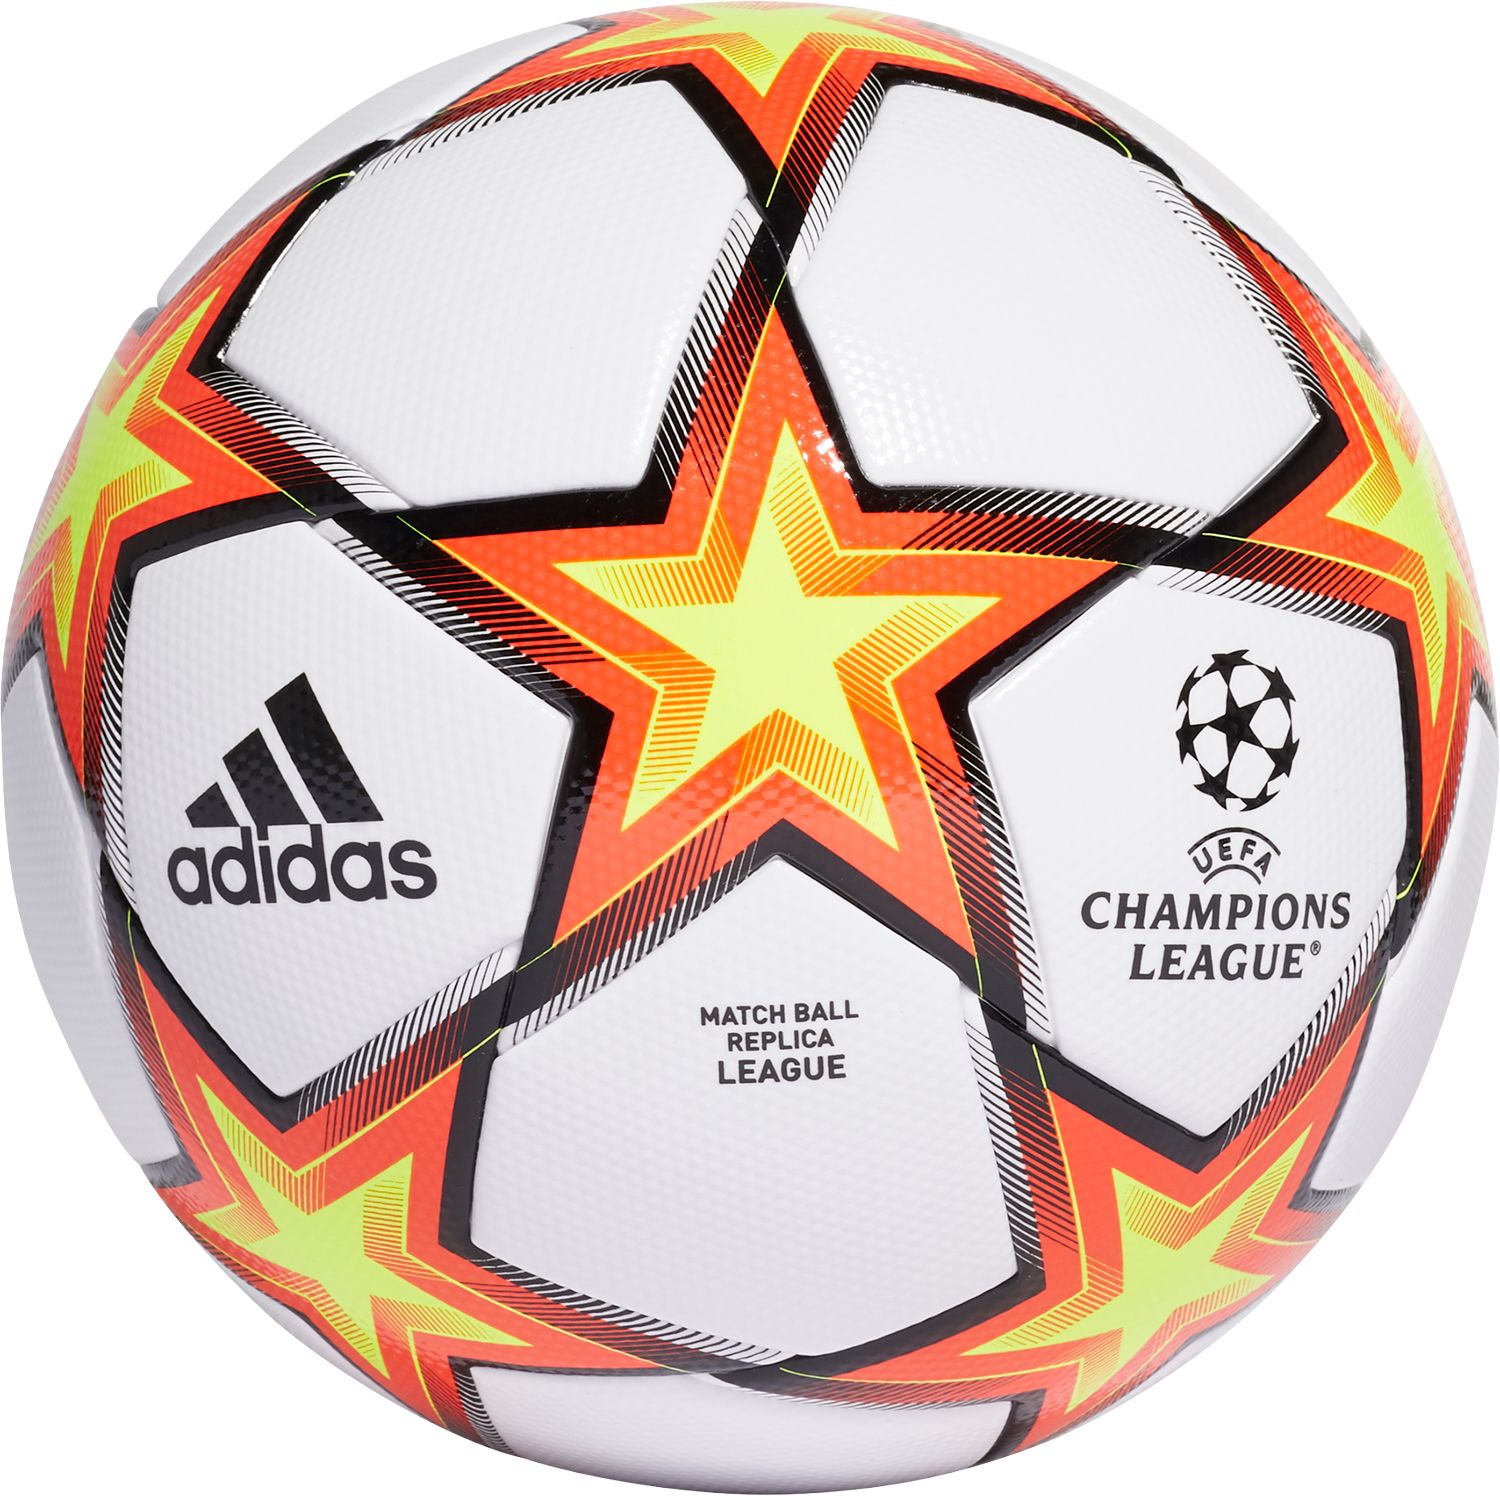 / UEFA Champions League League Soccer Ball